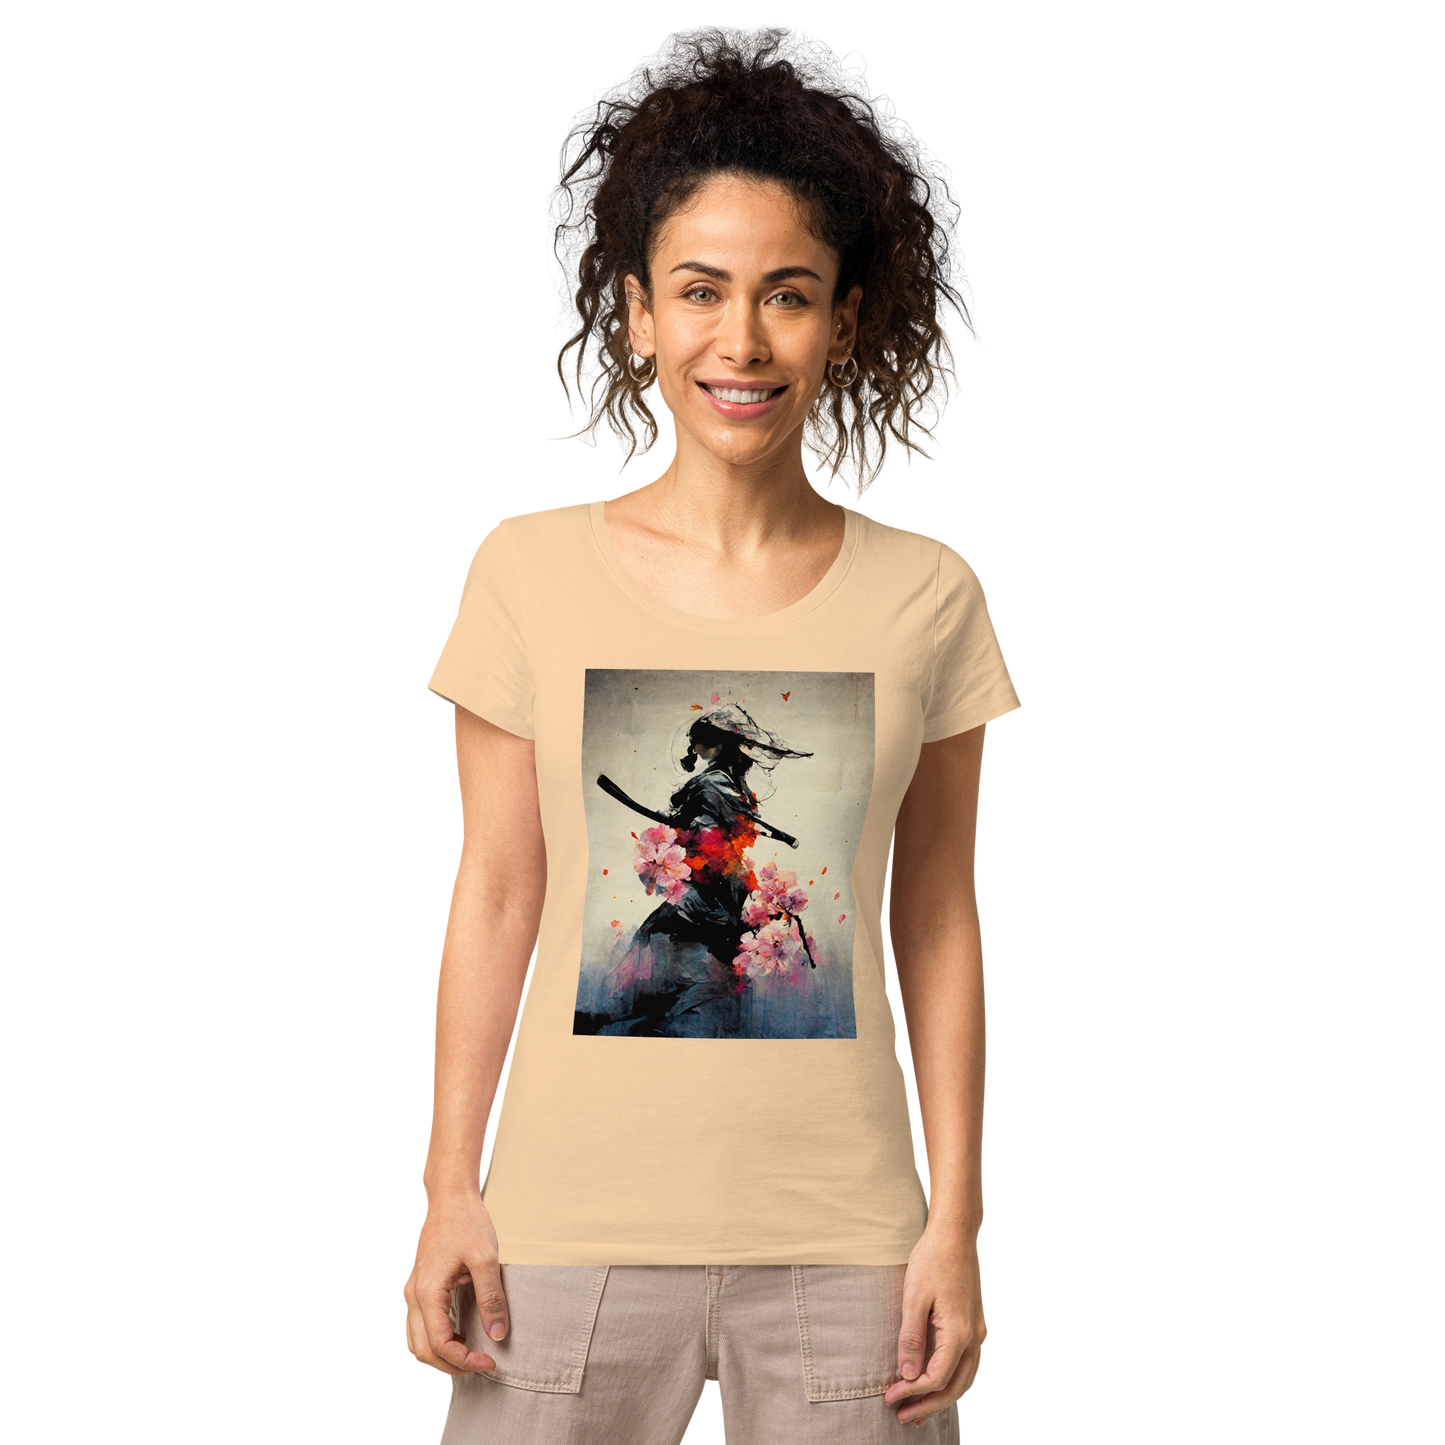 Shadow Samurai Sakura - Women’s Organic T-Shirt